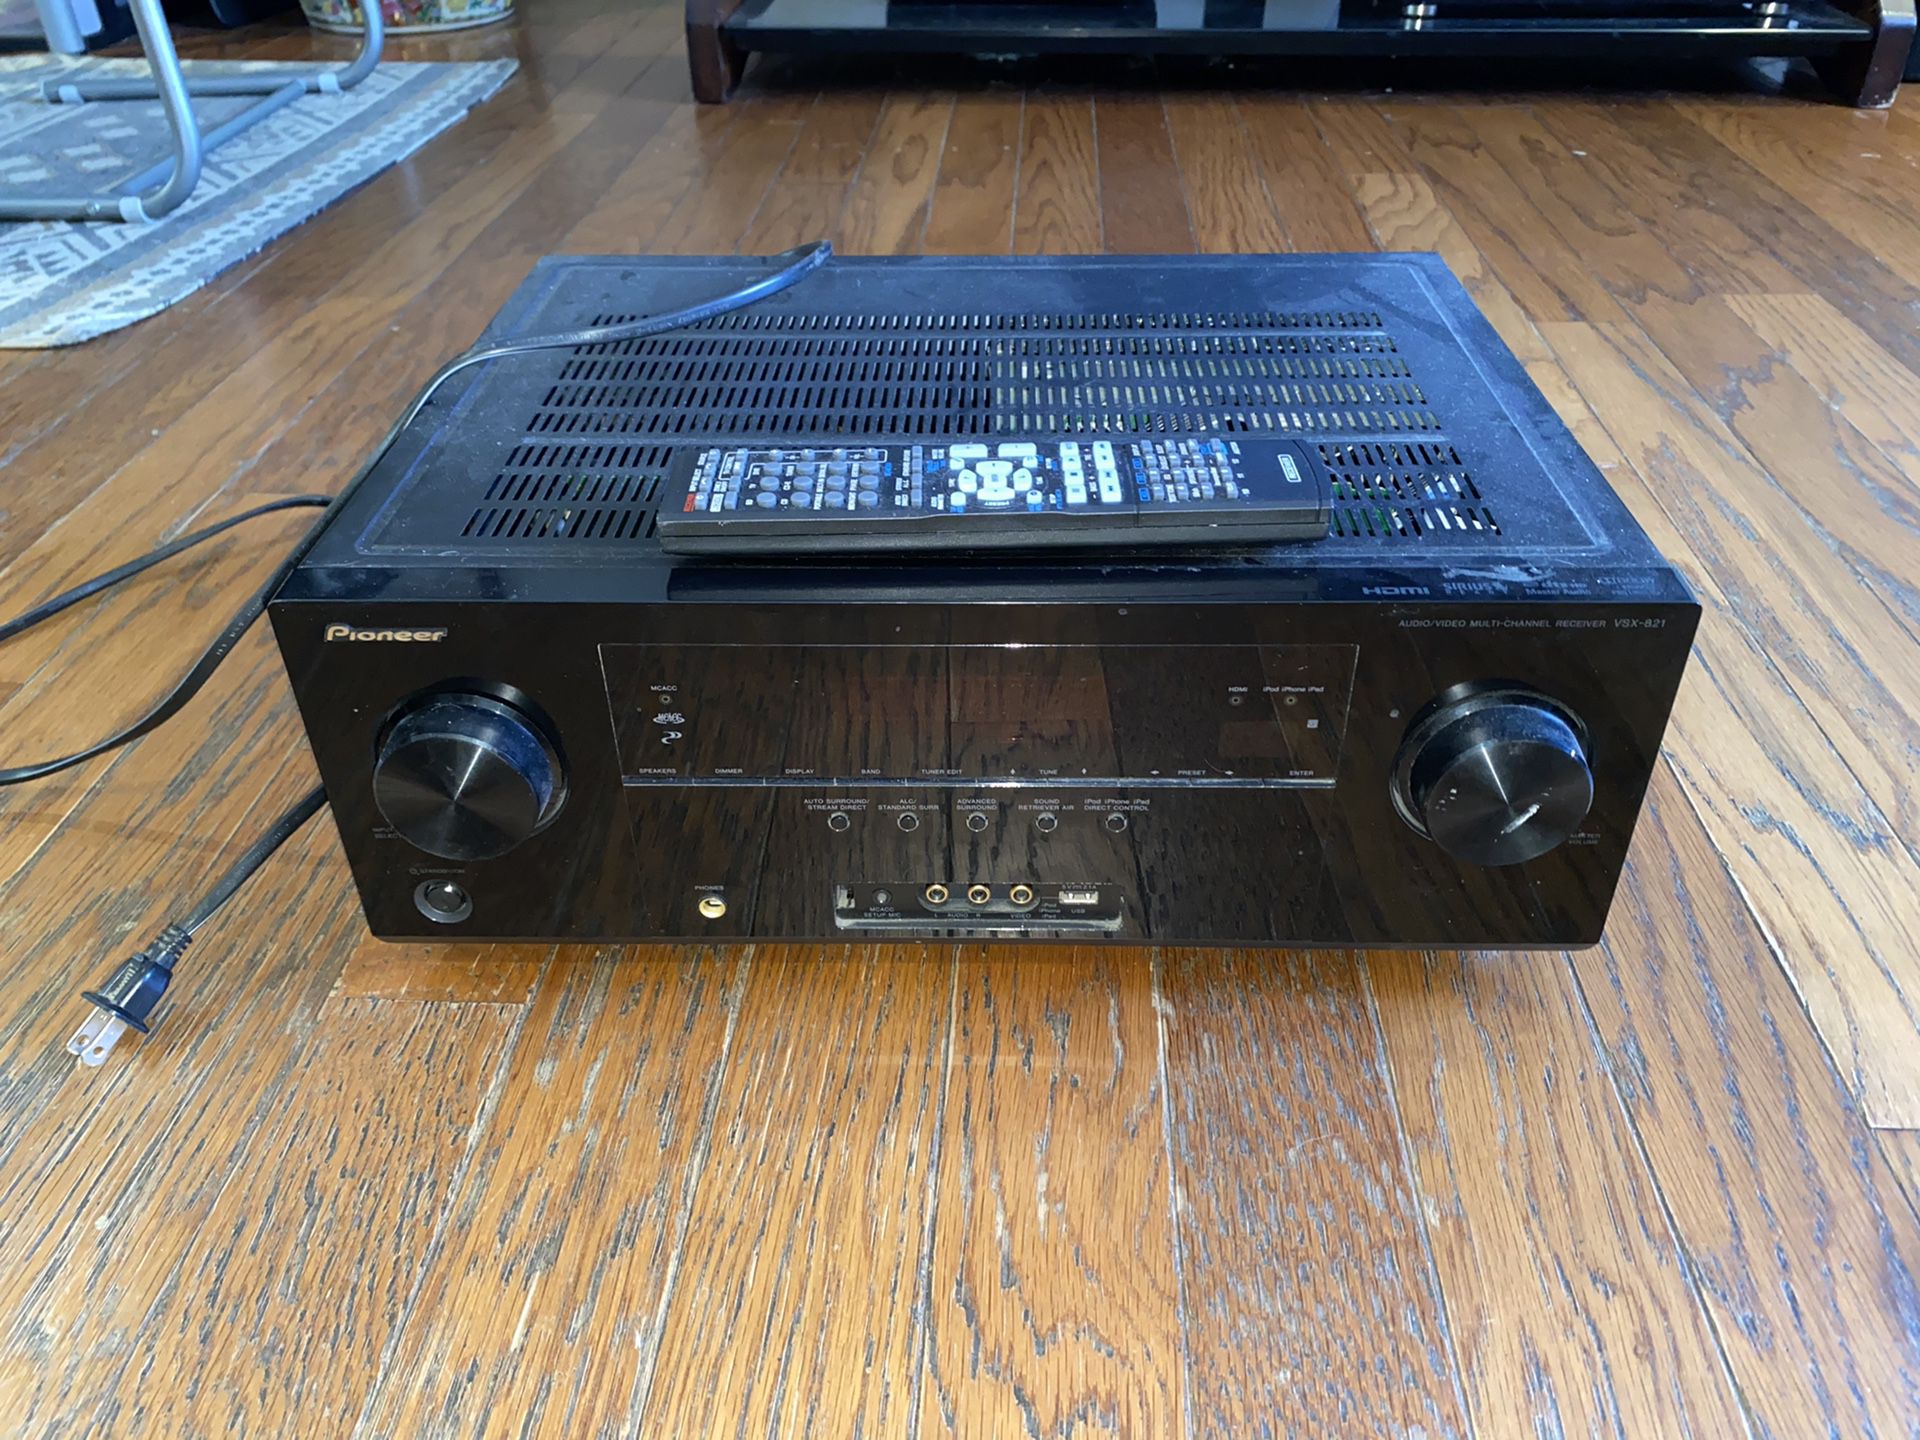 Pioneer VSX-821 digital receiver and amplifier